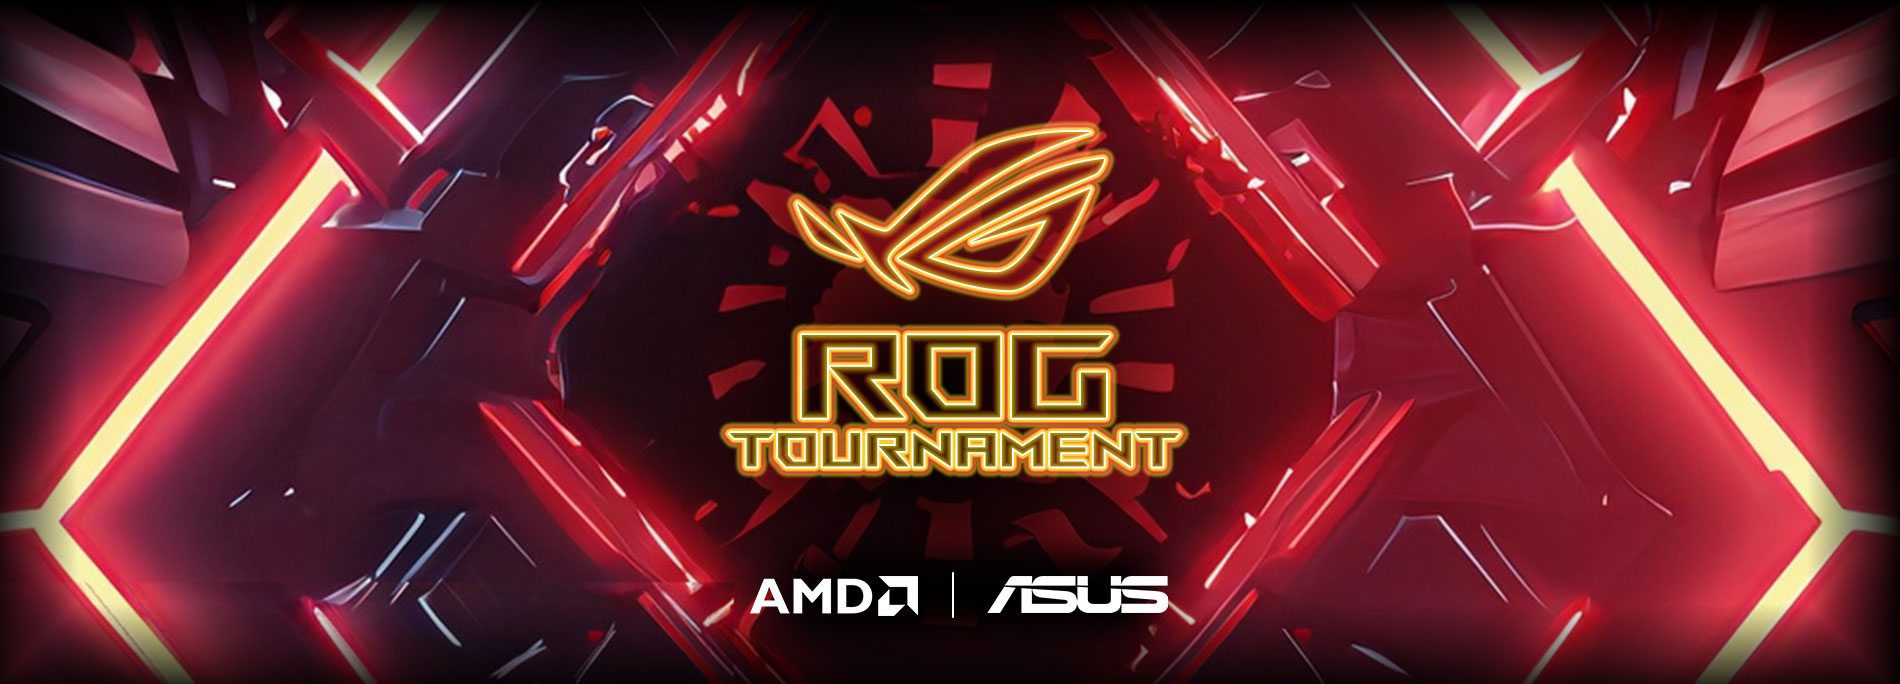 ROG Tournament